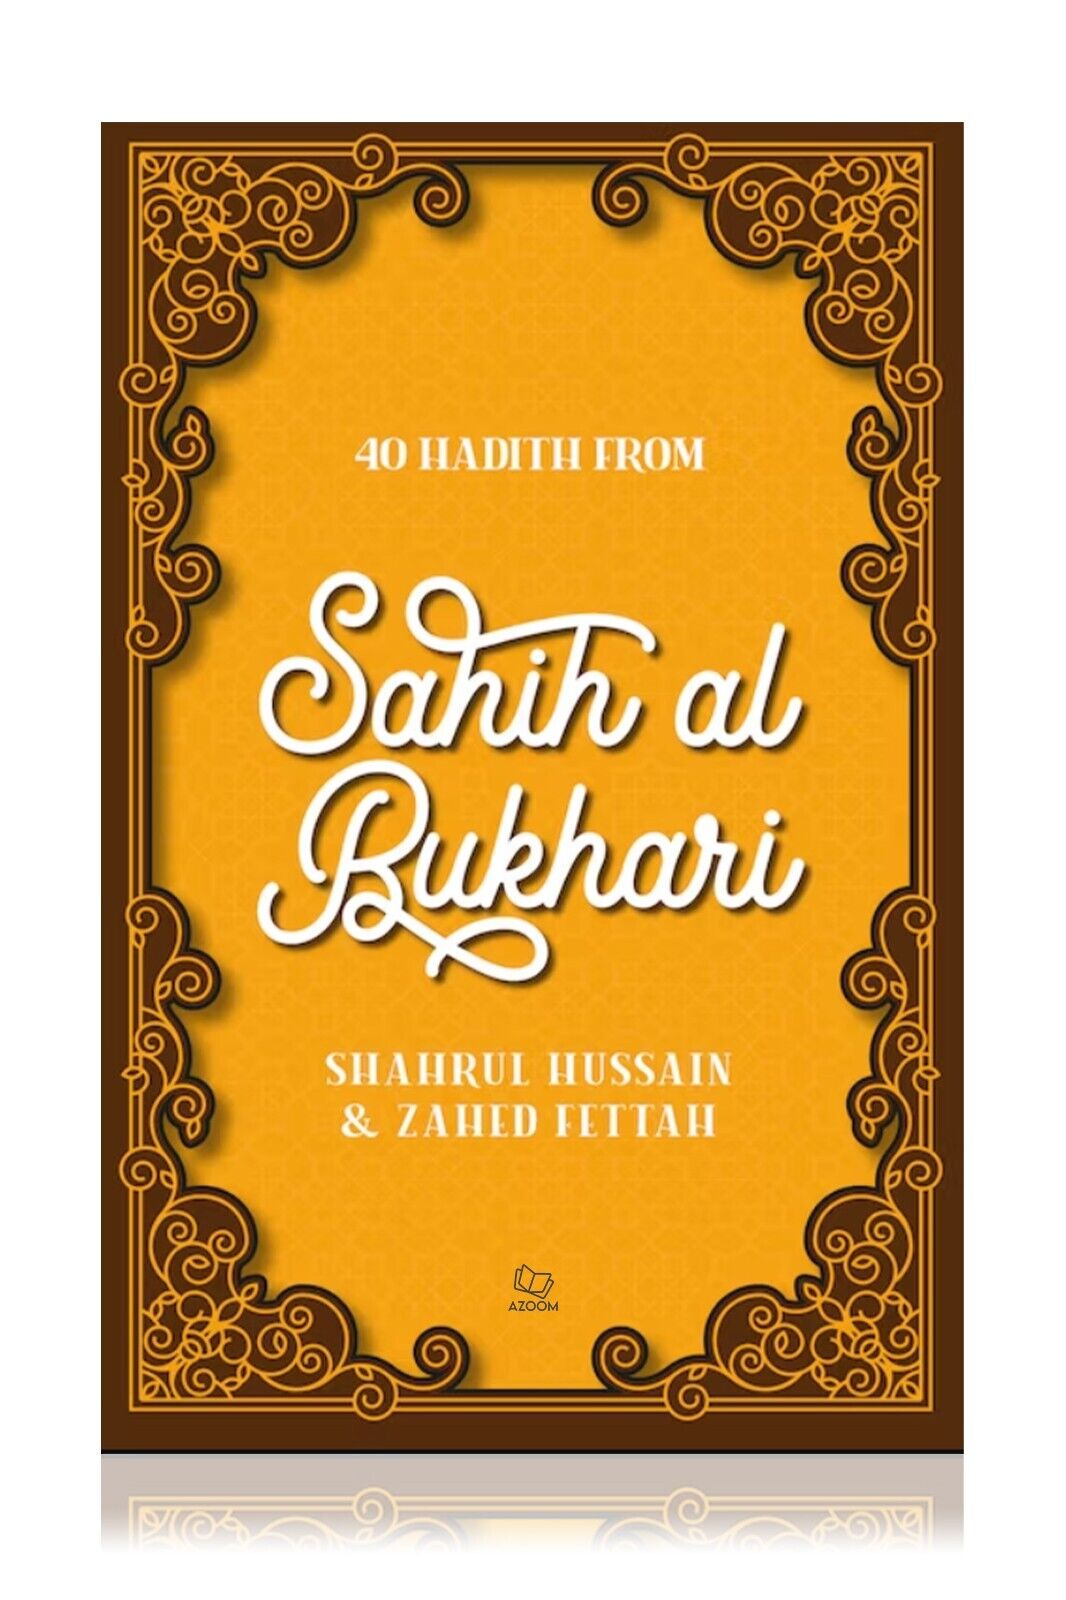 40 Hadith from Sahih al Bukhari SHAHRUL HUSSAIN & ZAHED FETTAH